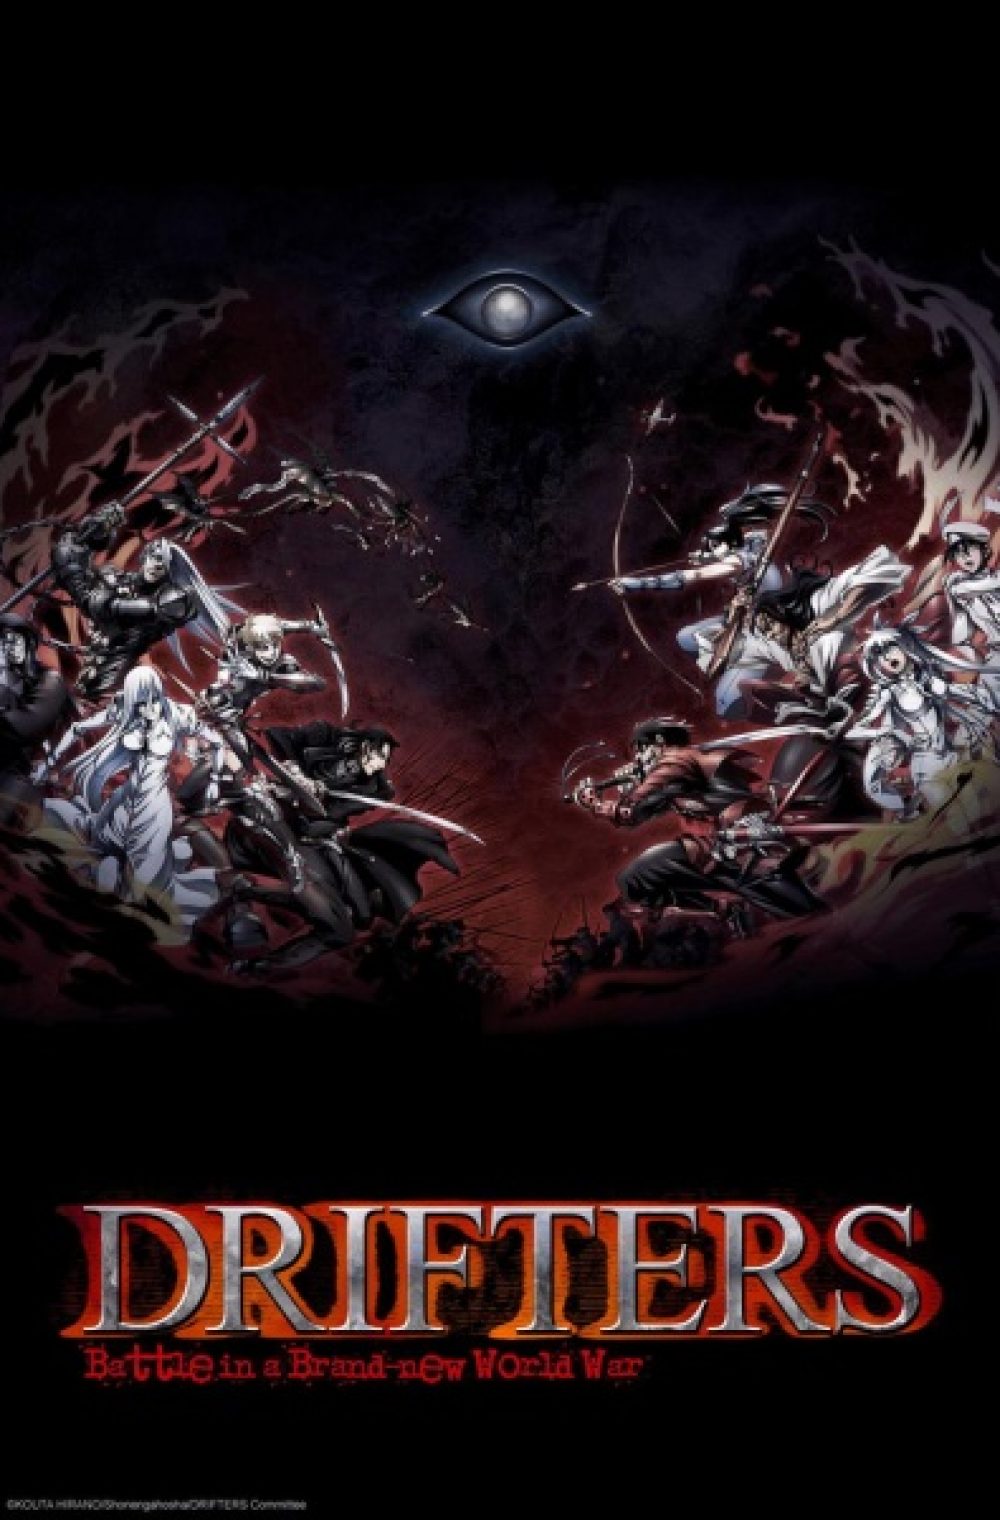 Drifters Specials